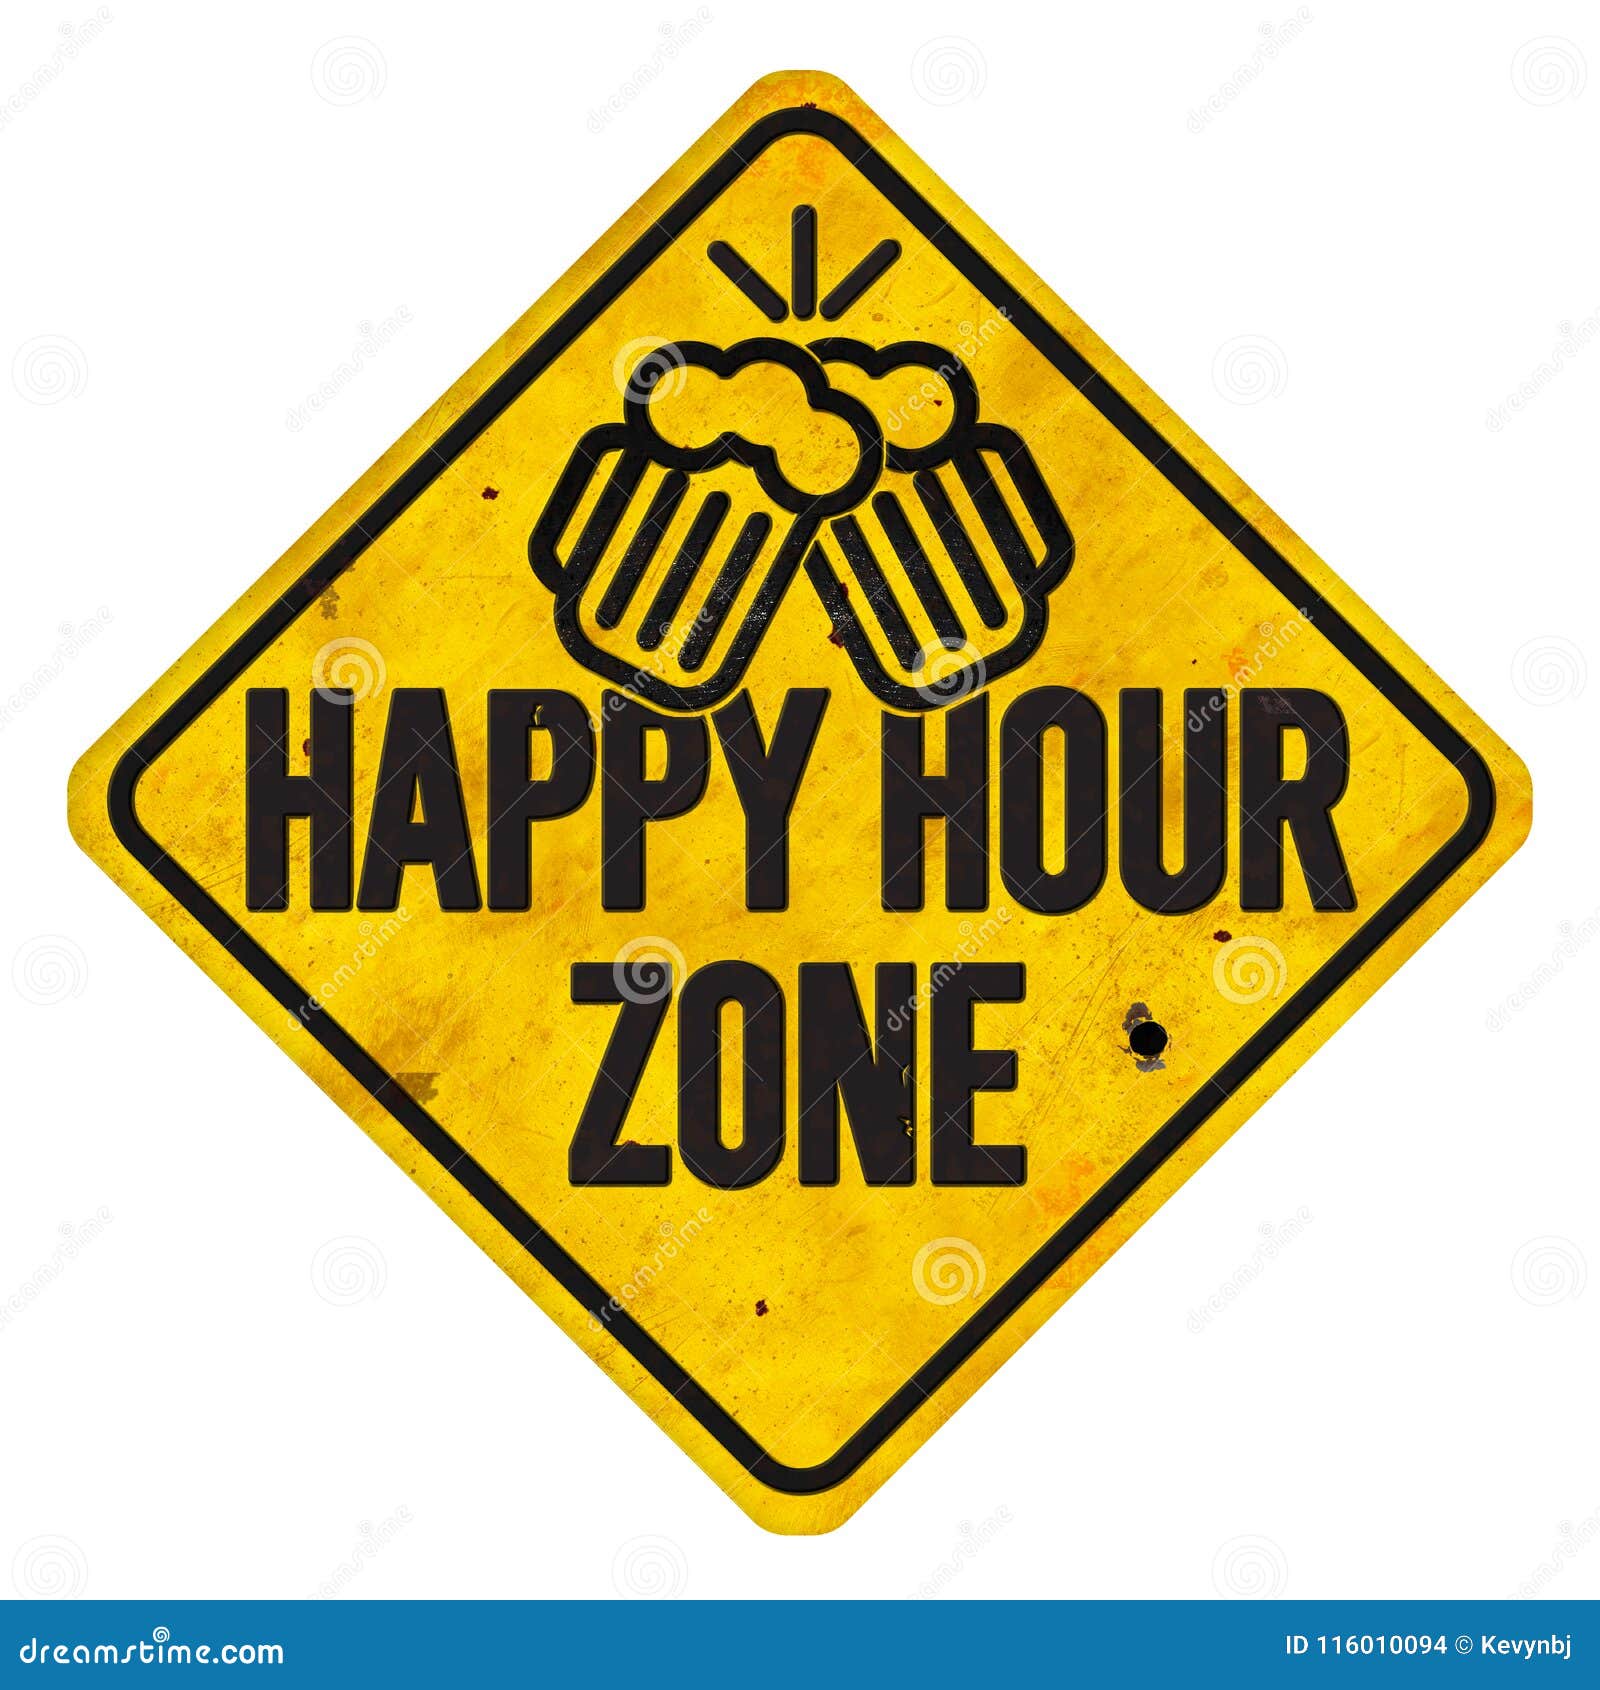 happy hour zone sign